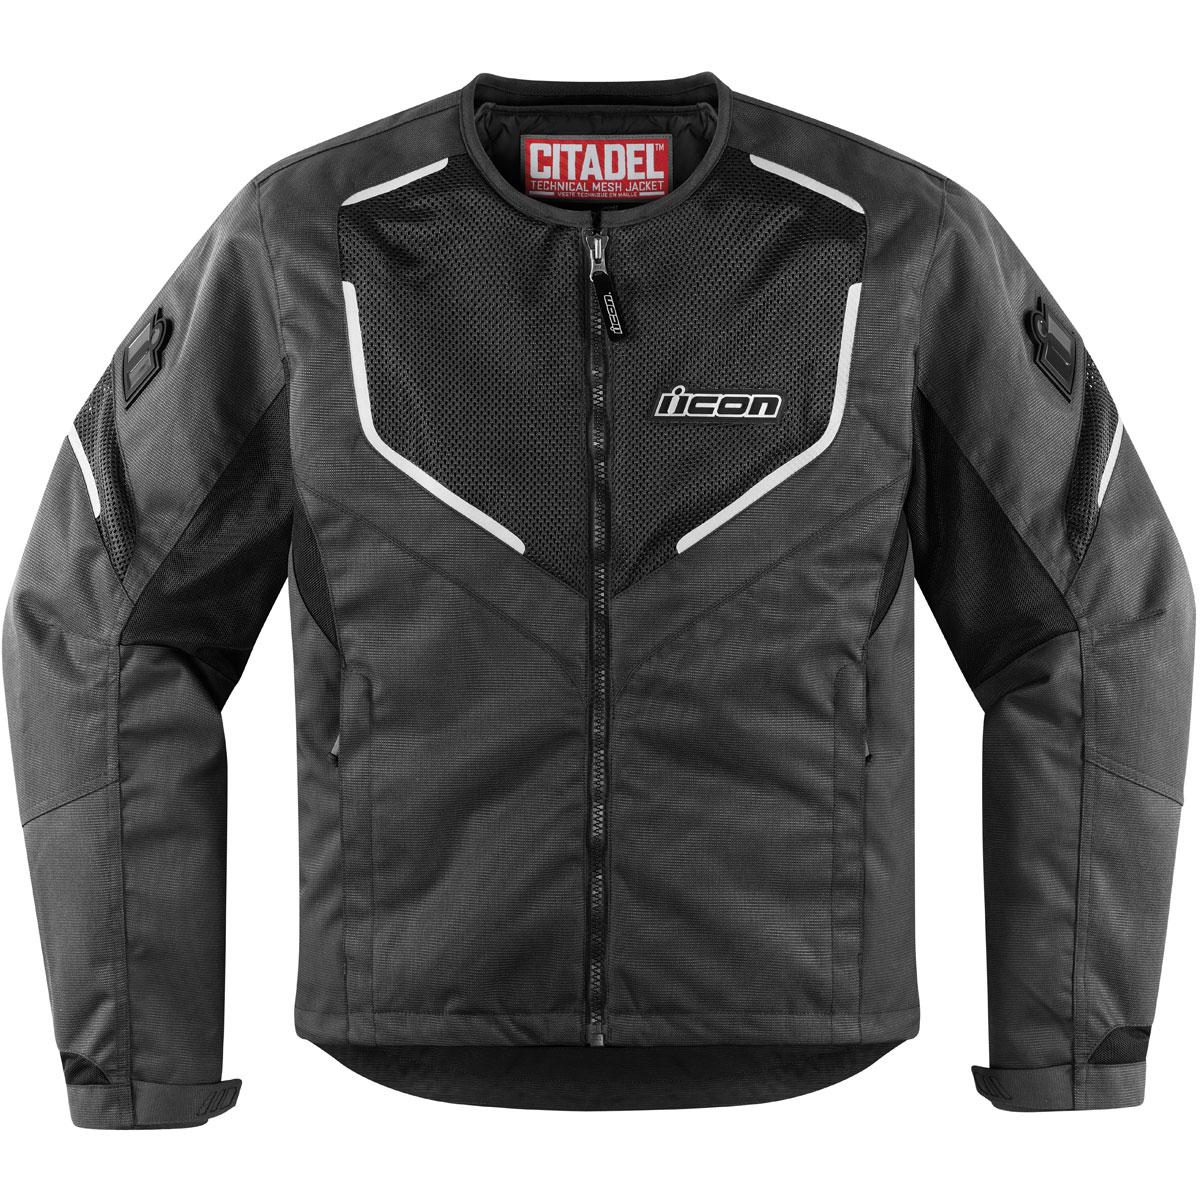 Icon citadel mesh jacket motorcycle jackets